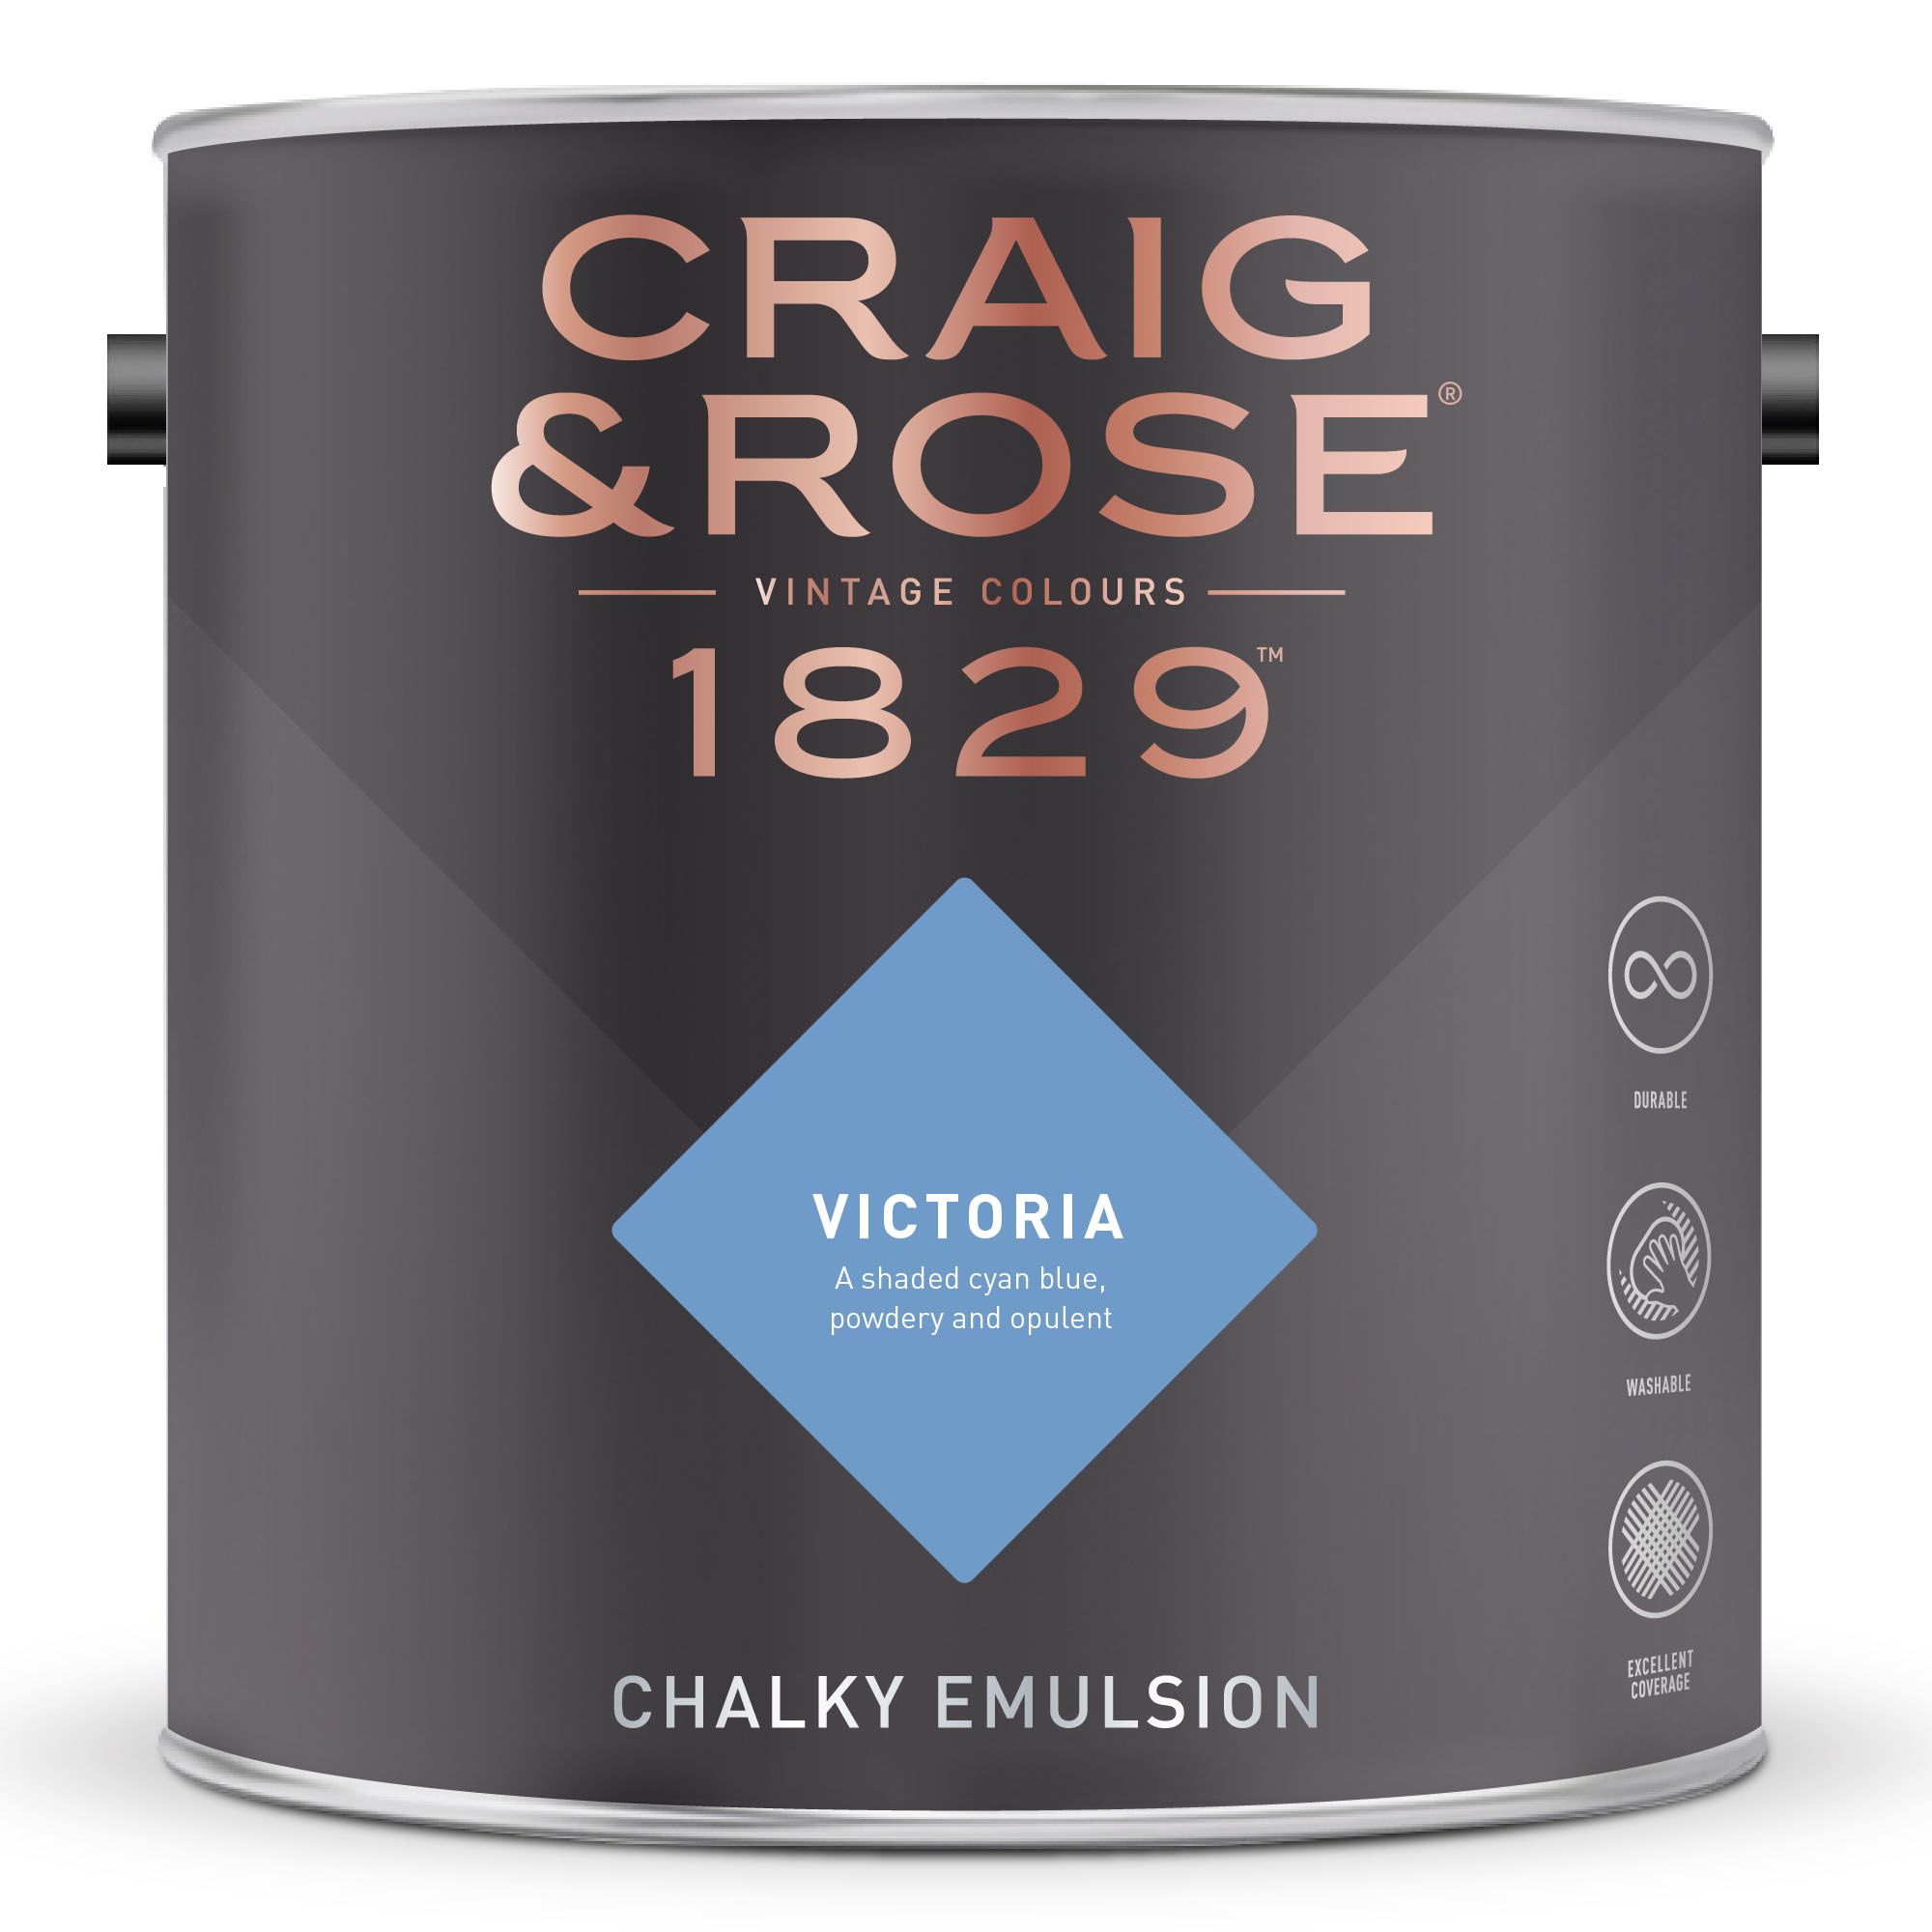 Craig & Rose 1829 Victoria  Chalky Emulsion paint, 2.5L